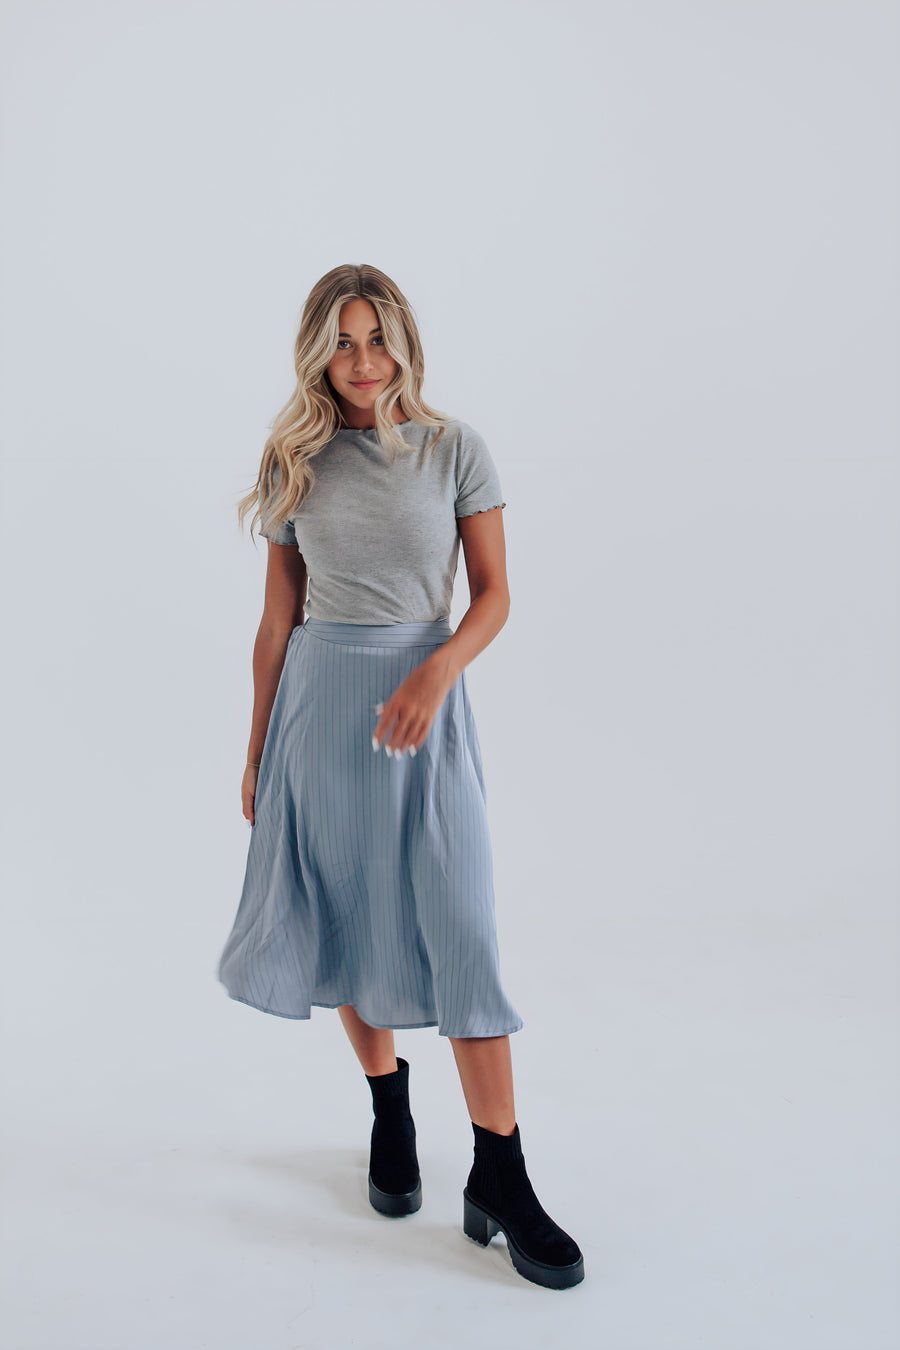 Midi length skirt in dusty blue